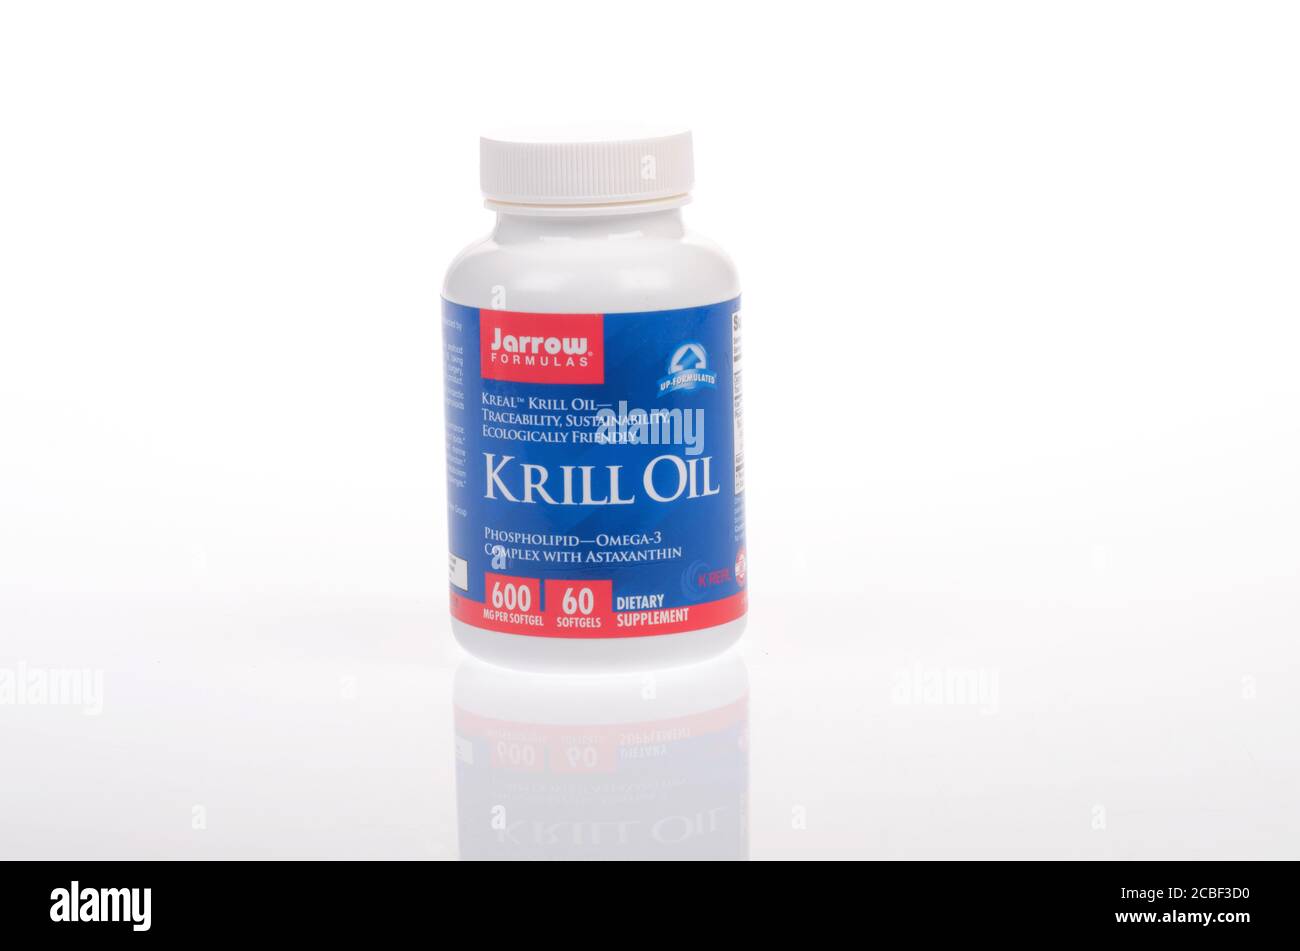 Jarrow Formulas Krill Oil Supplement Bottle Stock Photo